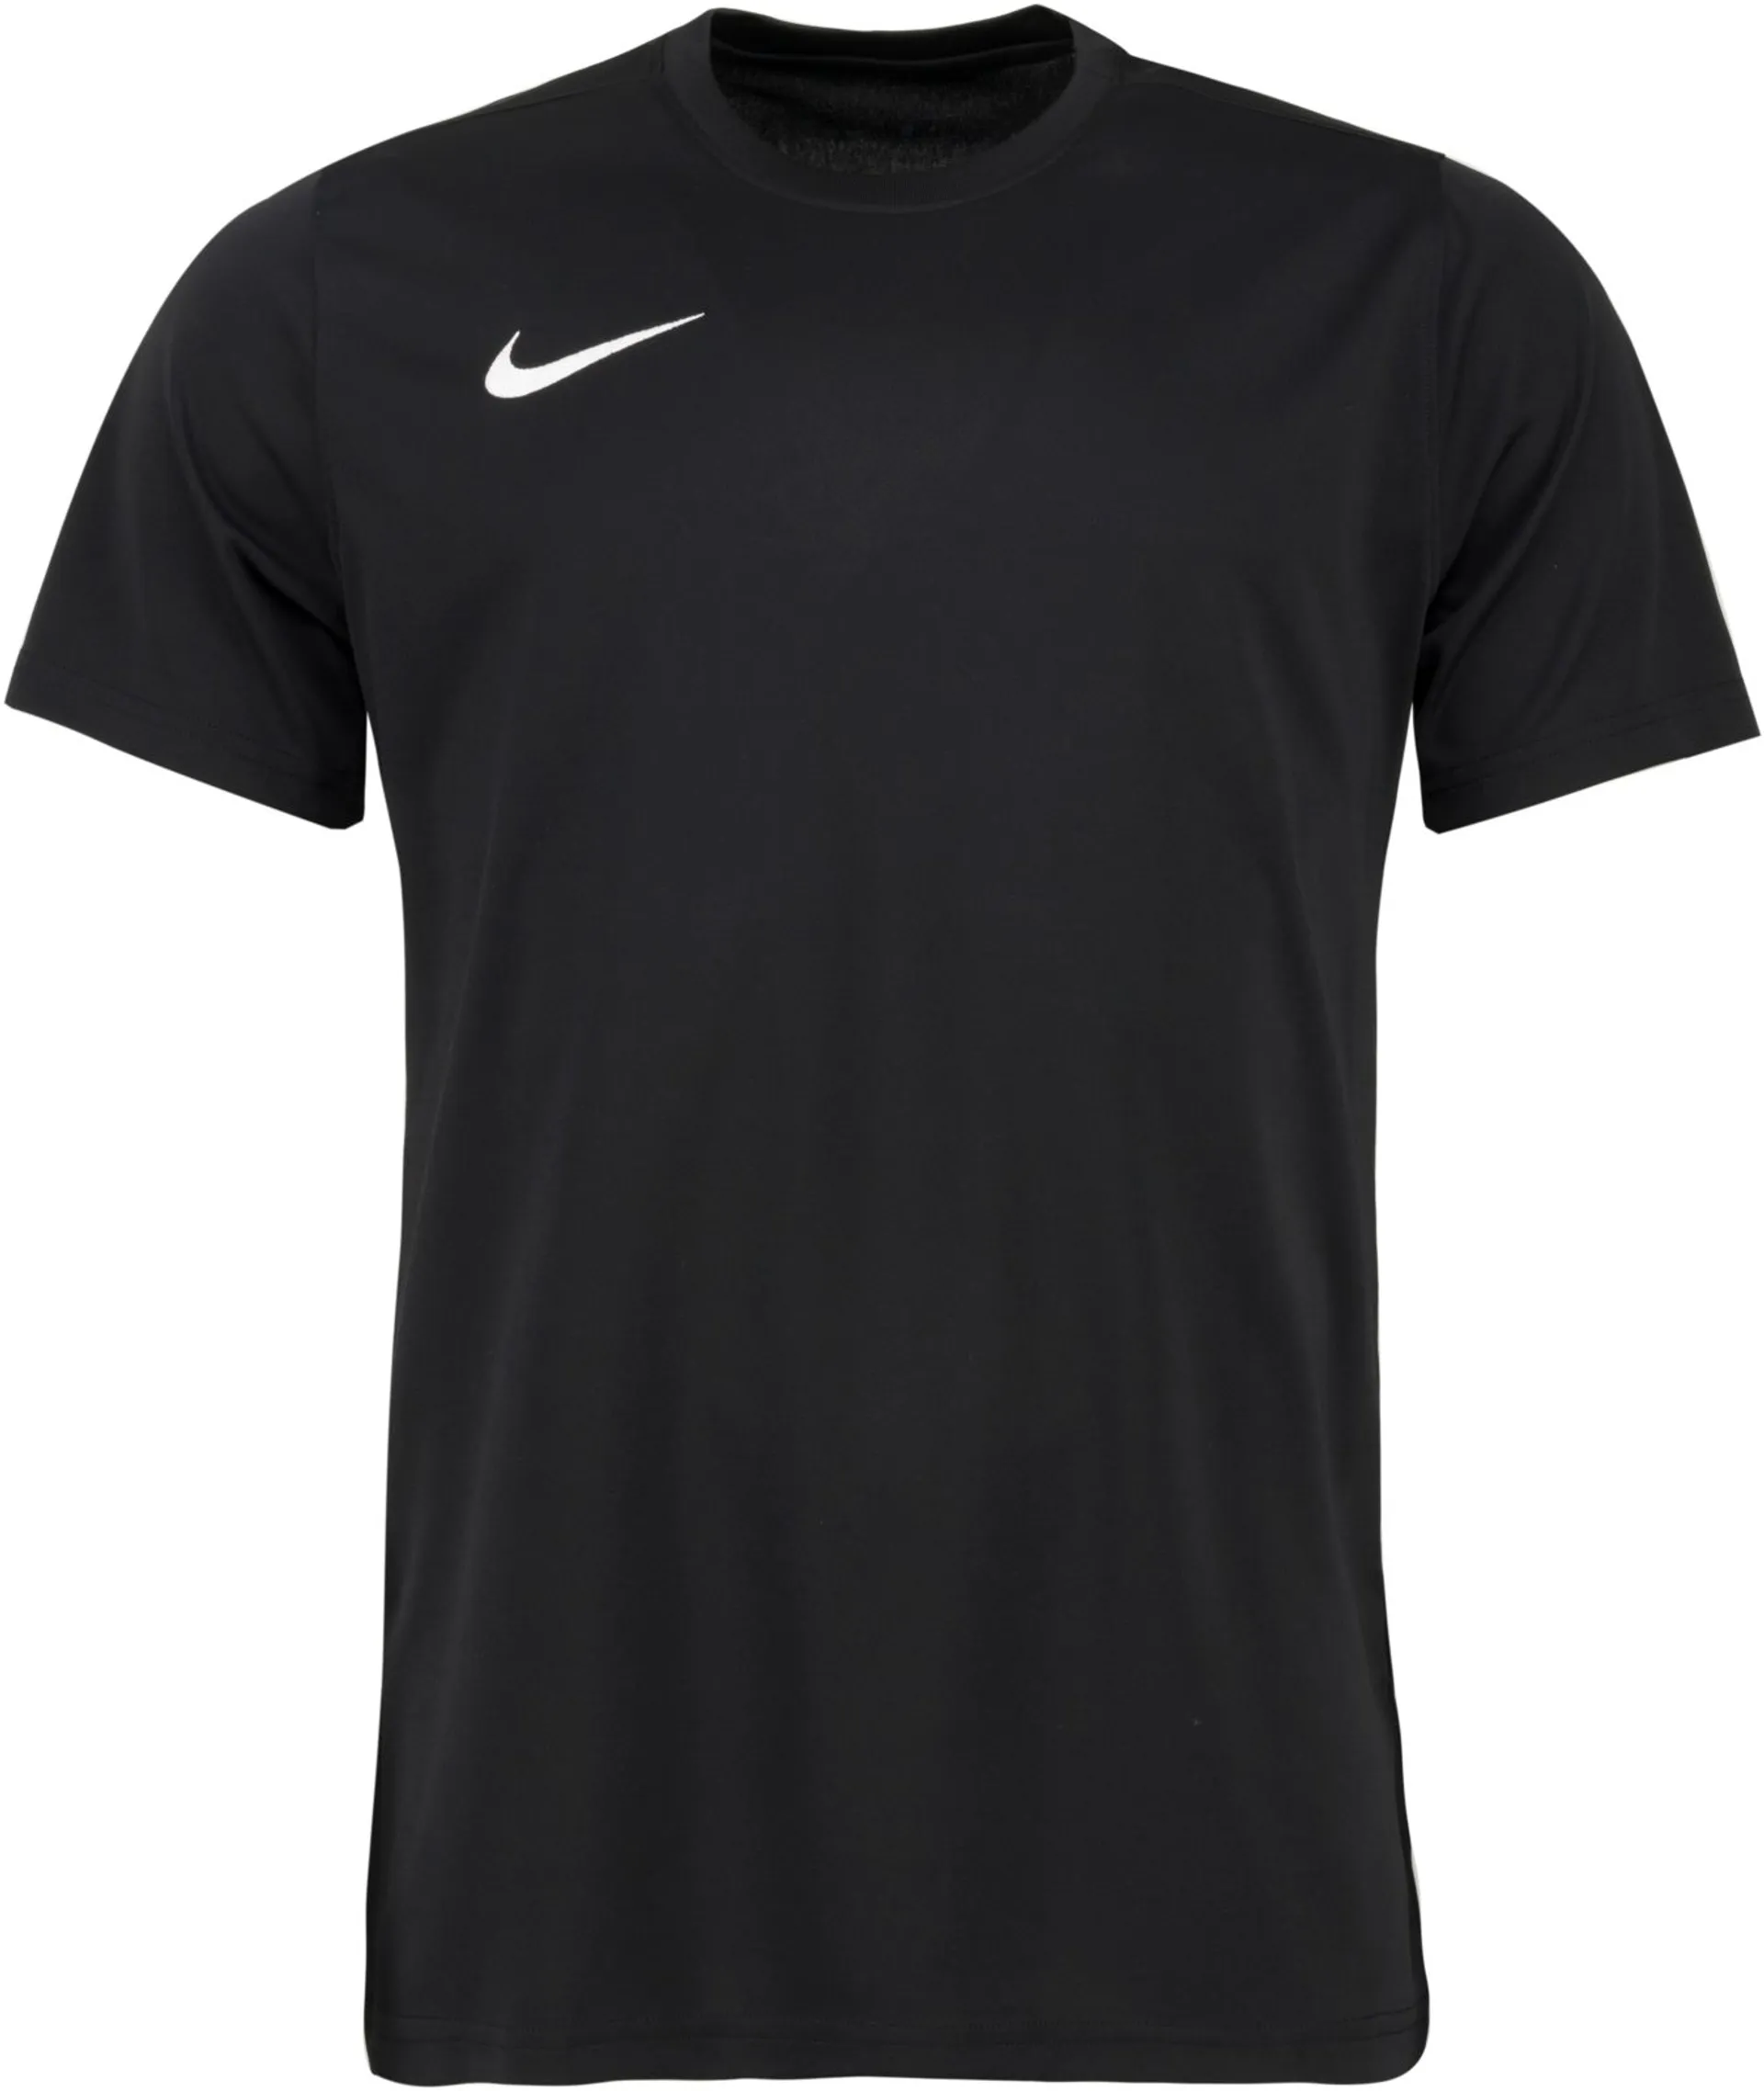 Nike miesten treenipaita Park BV6708 - MUSTA